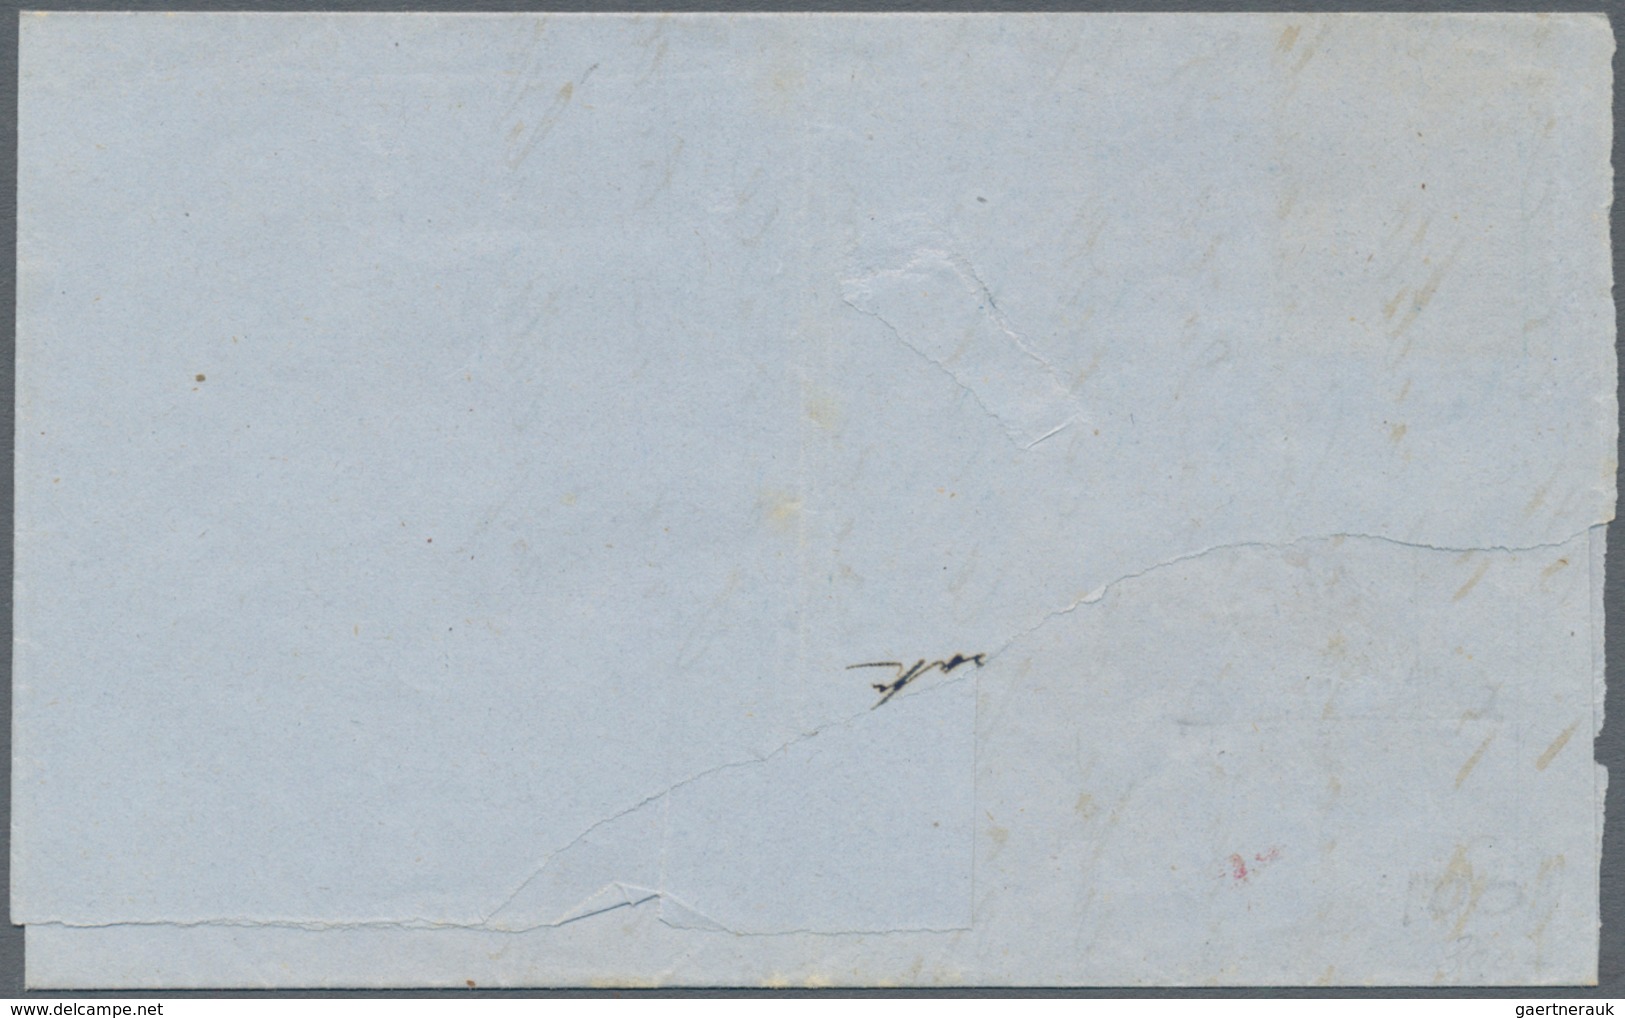 00867 Italien - Altitalienische Staaten: Sizilien: 1859, 2 Grana Ultramarin, First Plate, On A Letter Addr - Sicilië